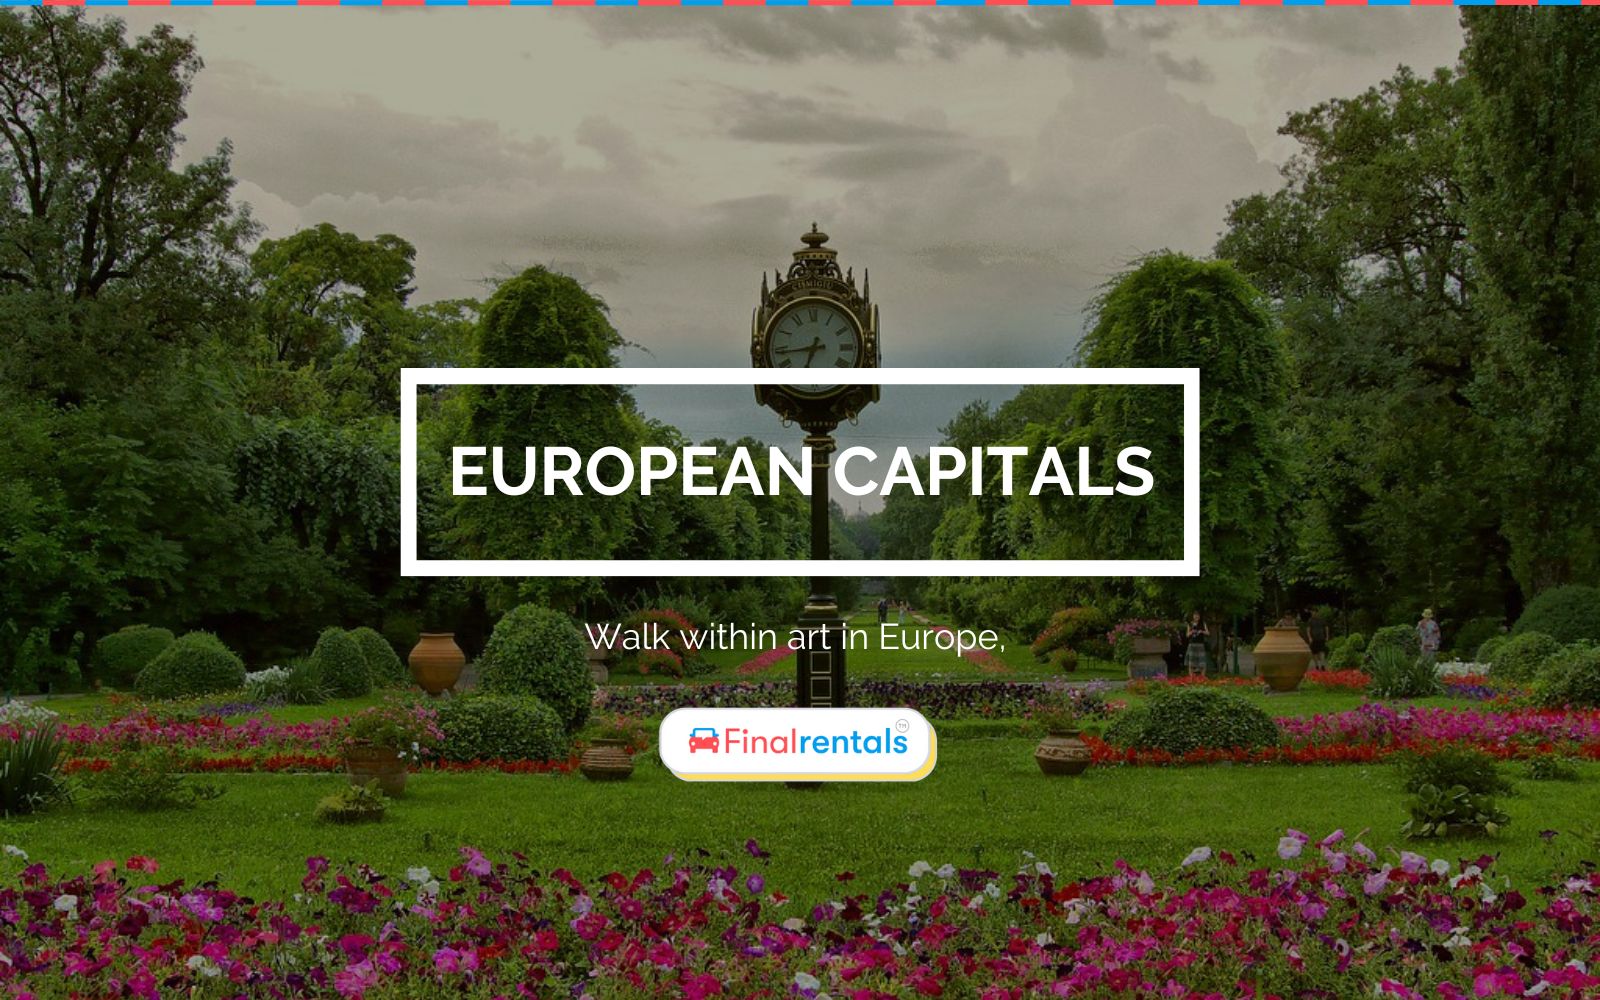 Do European Capitals